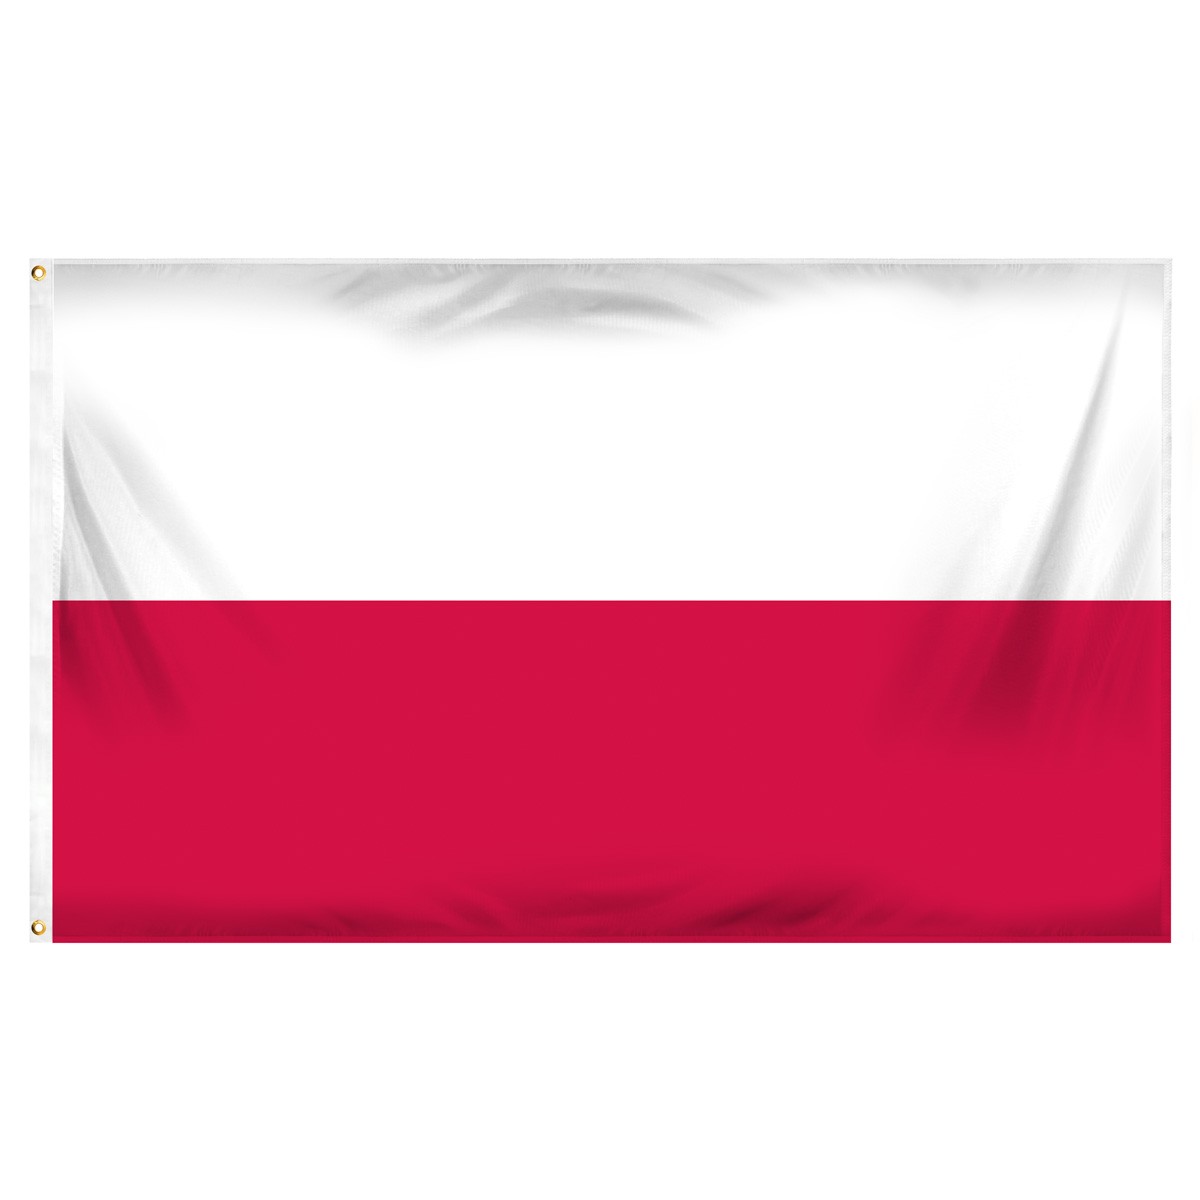 Poland Framed Pictures